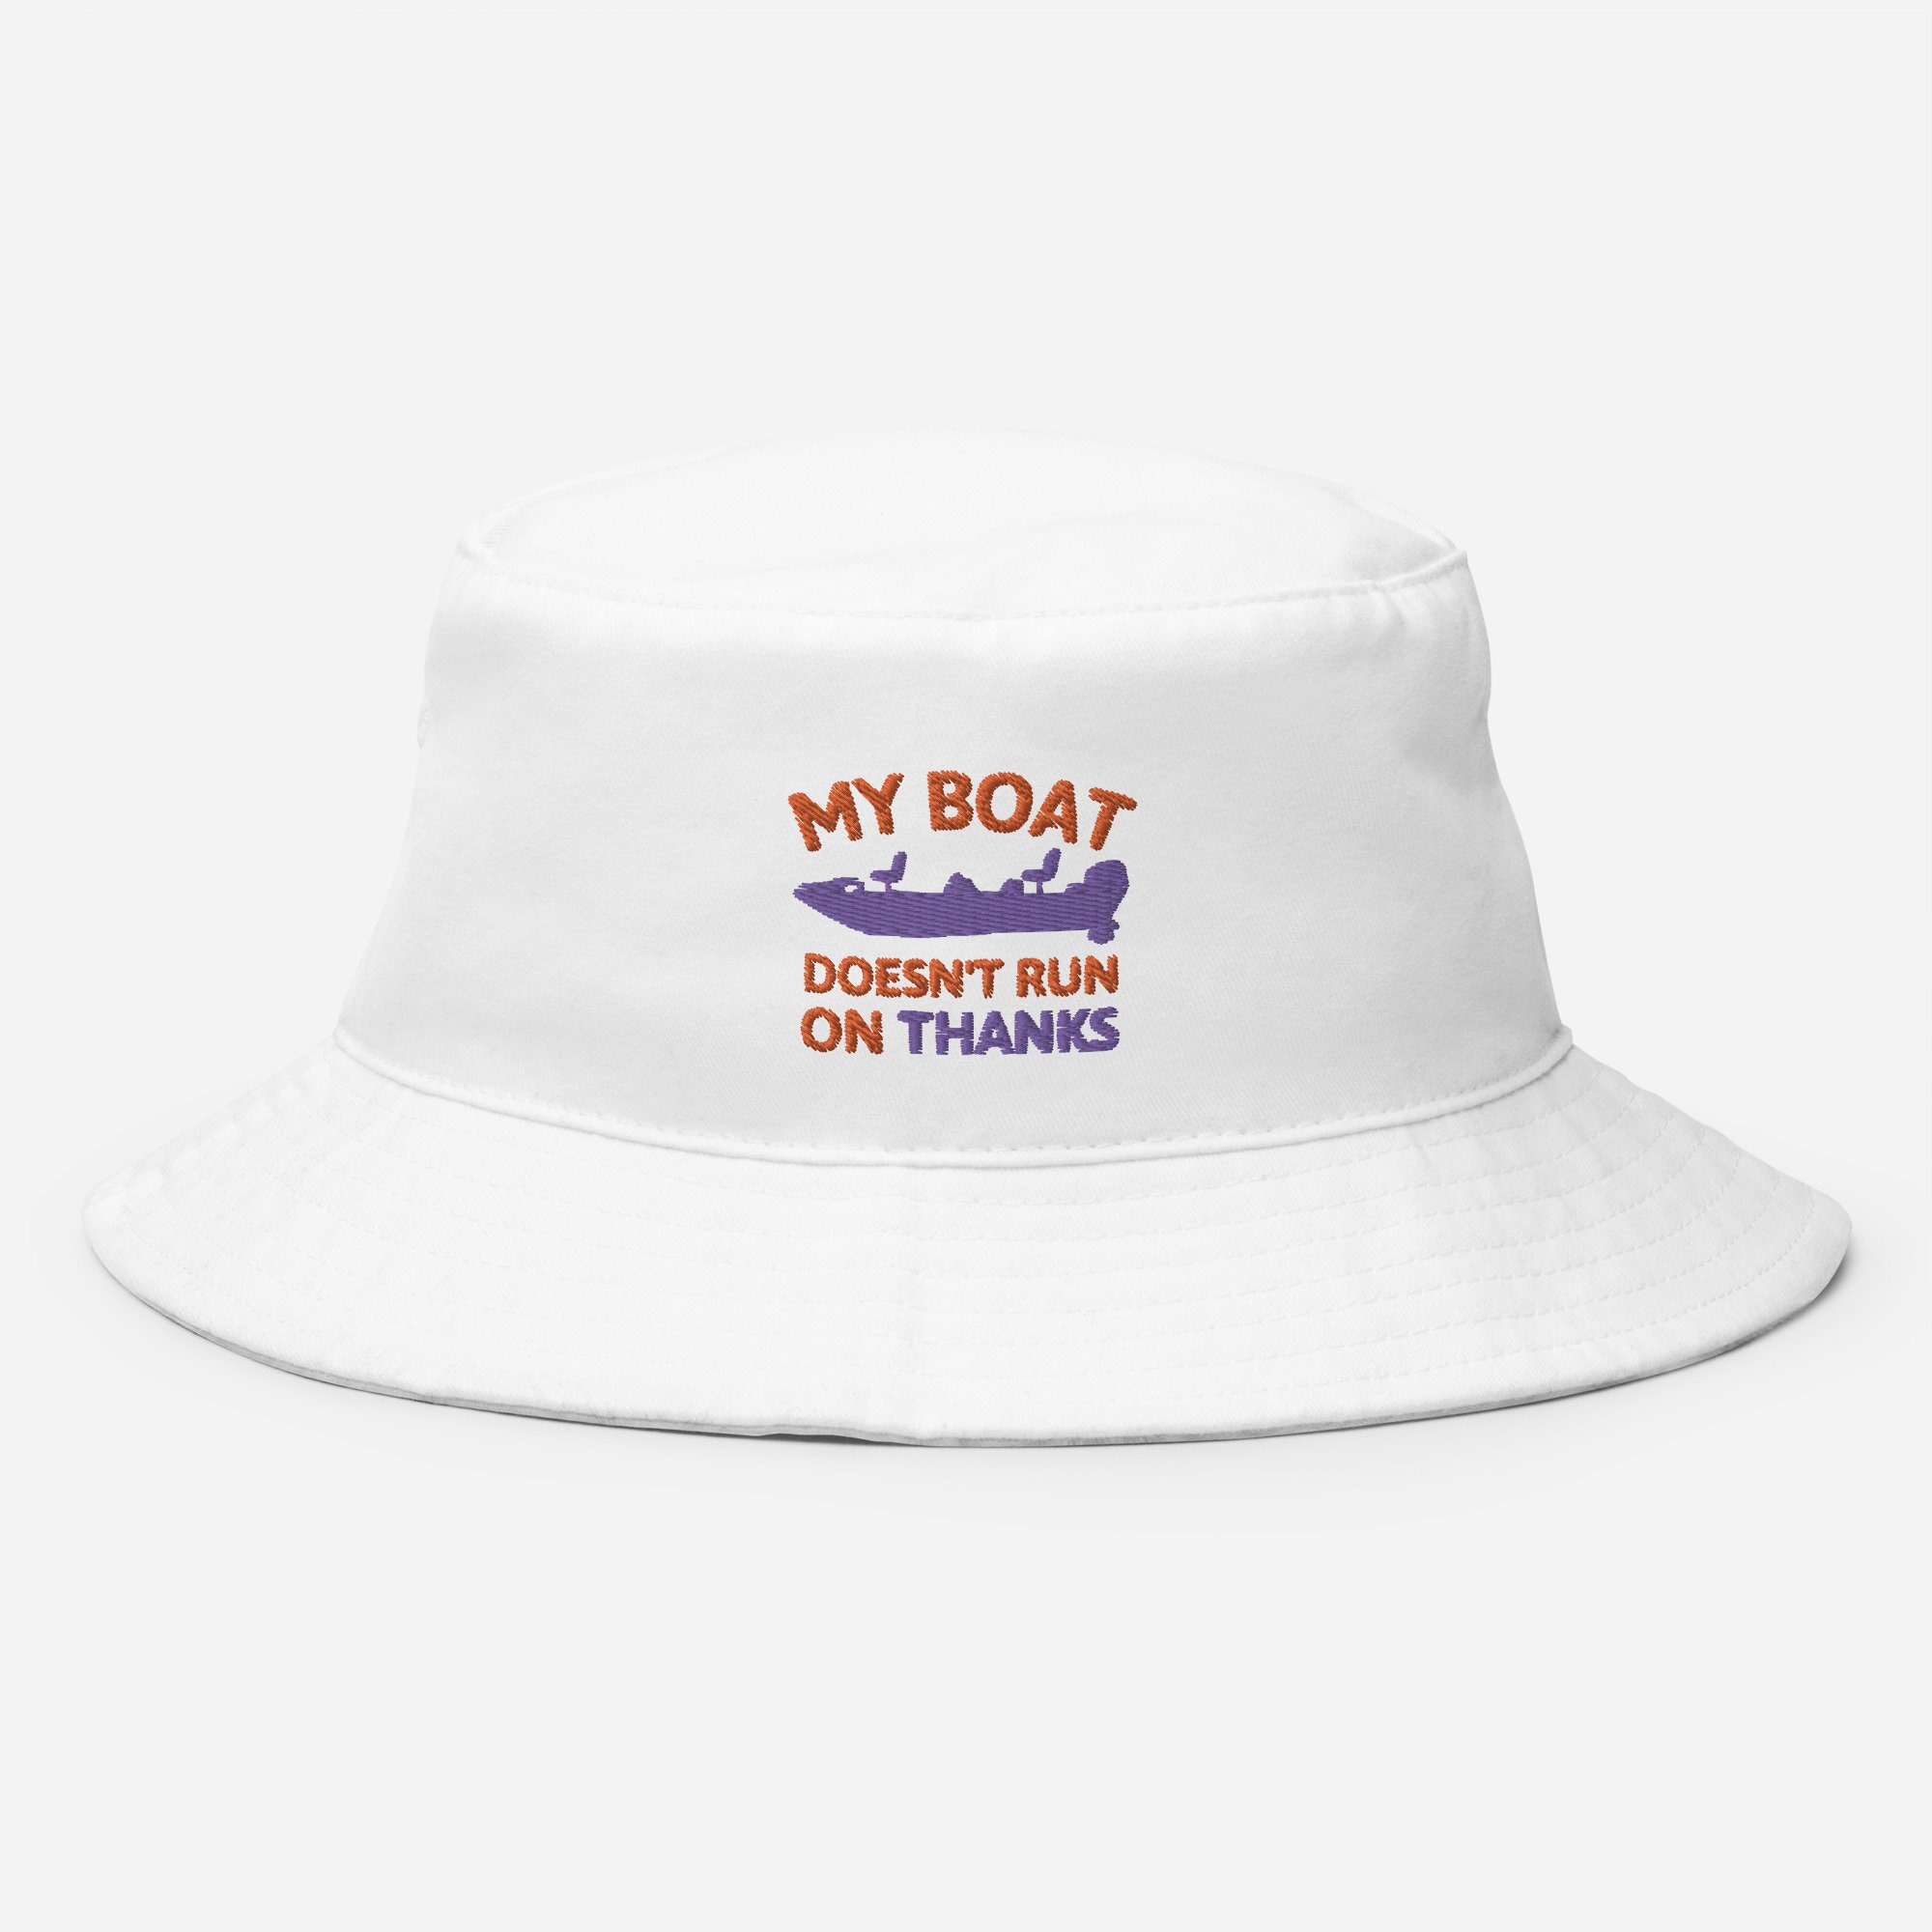 Buy Funny Boating Bucket Hat Fisherman Hat Online in India 